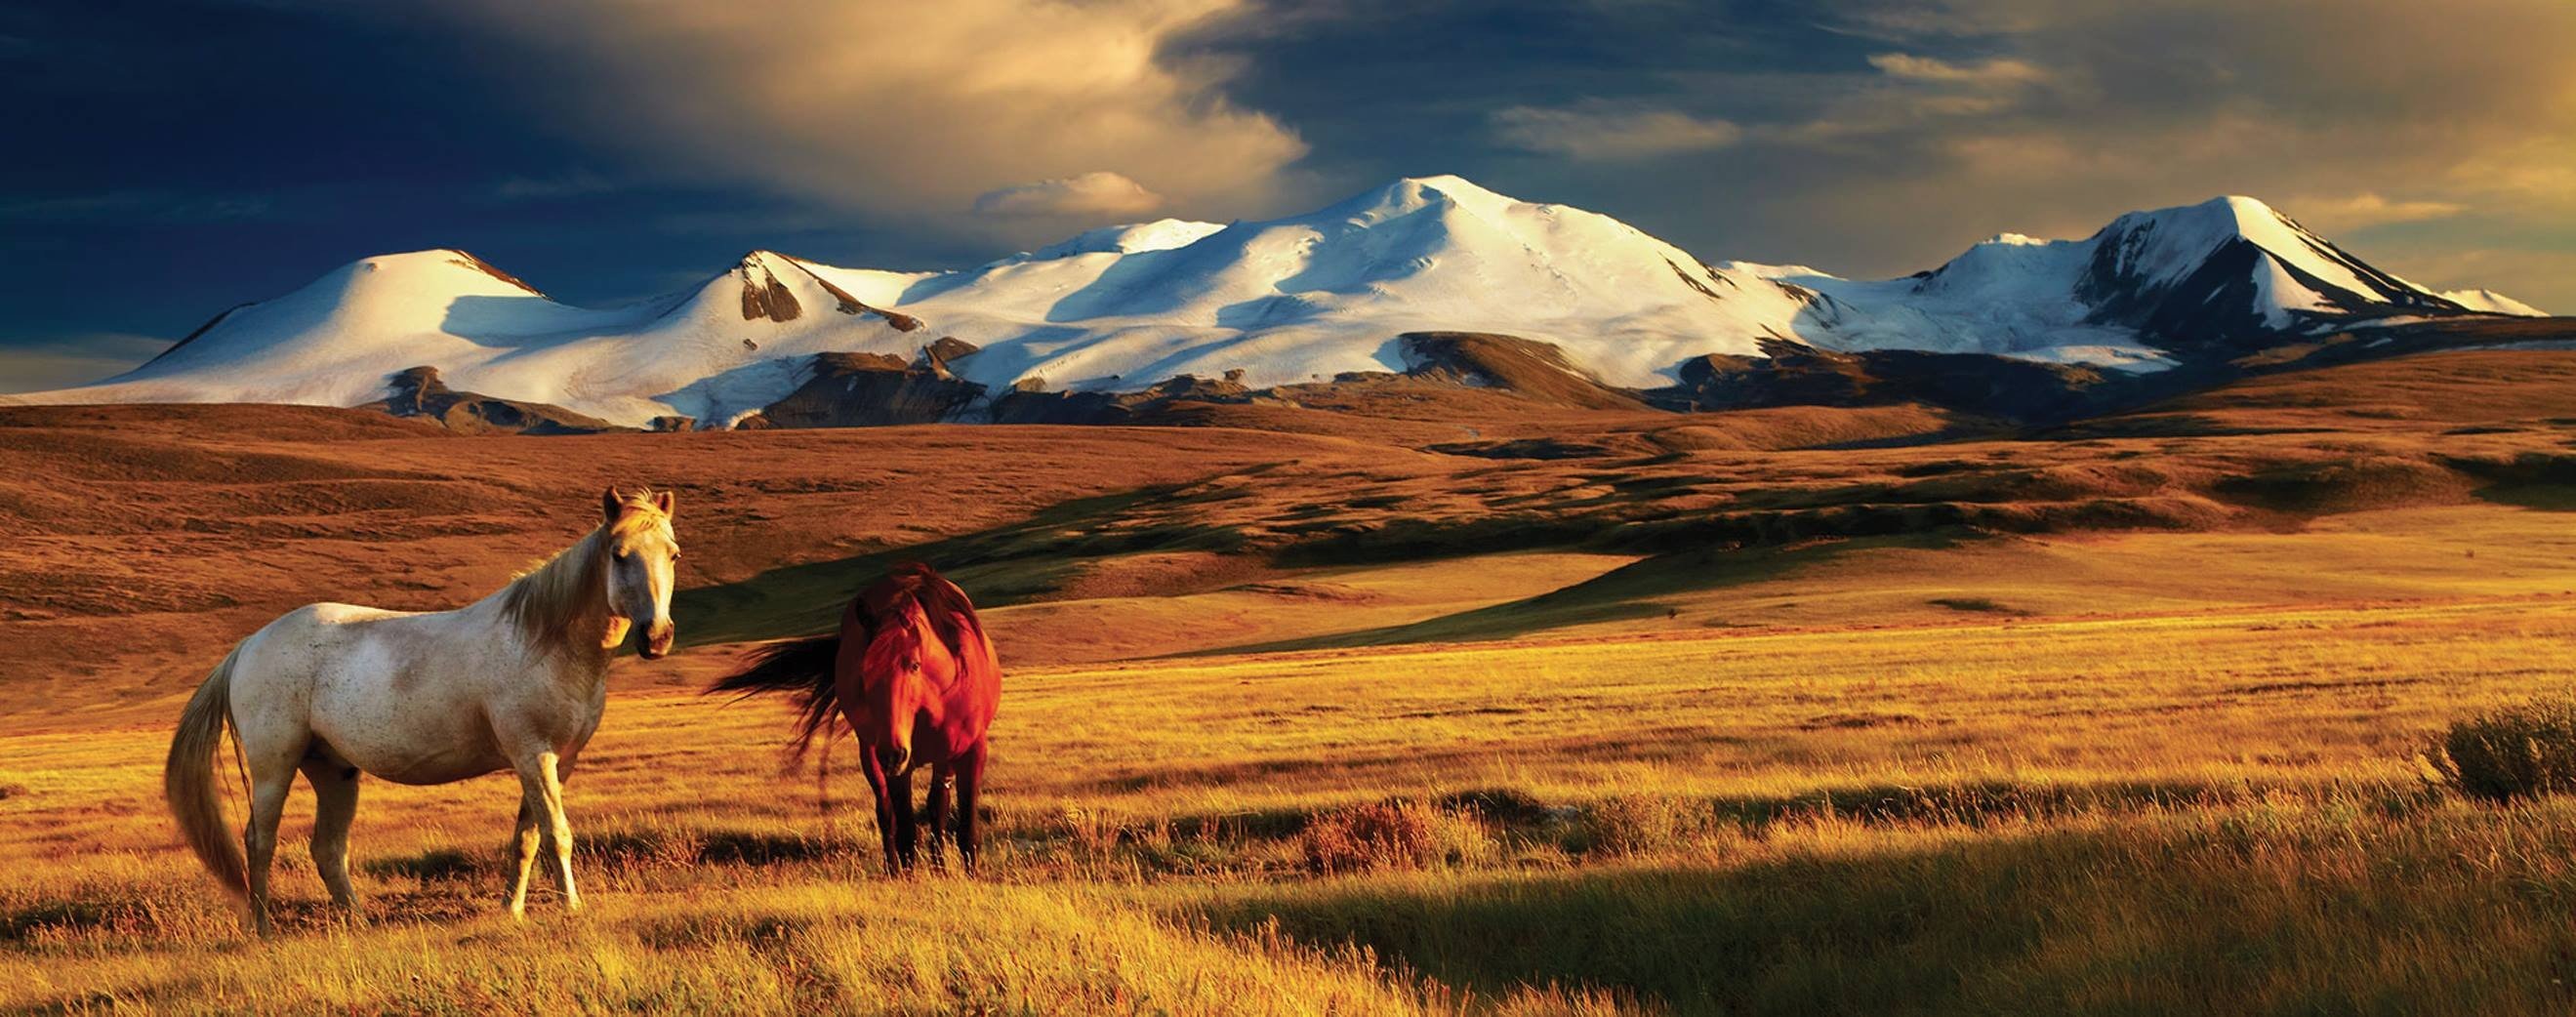 Mongolia, ötüken, Horse, Mountains Wallpaper